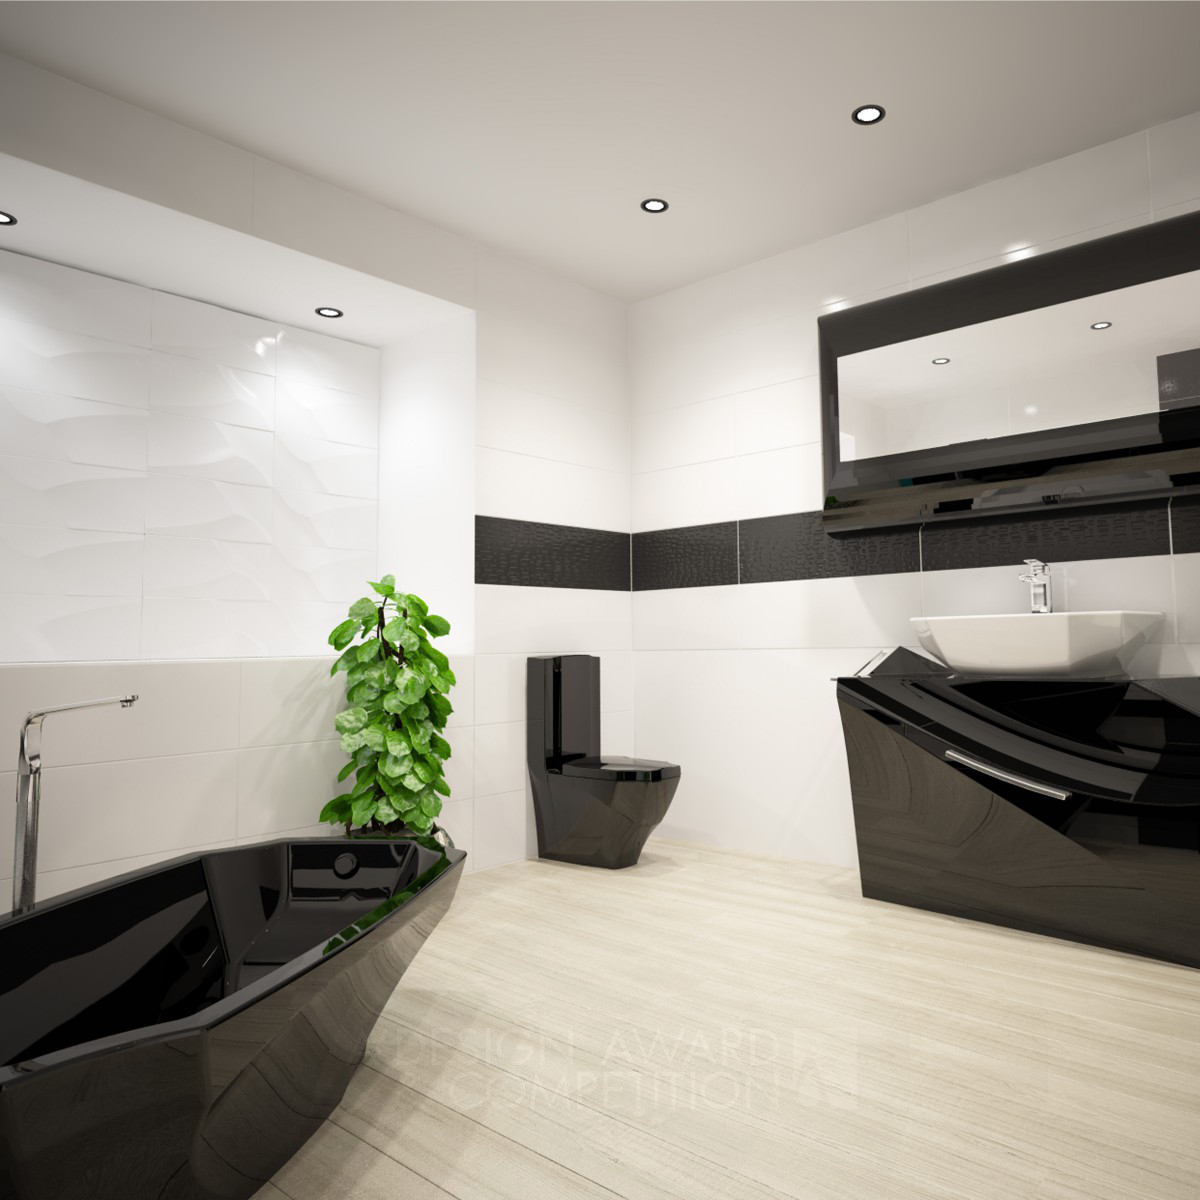 FRACTURE bathroom set by Bien Seramik Design Team